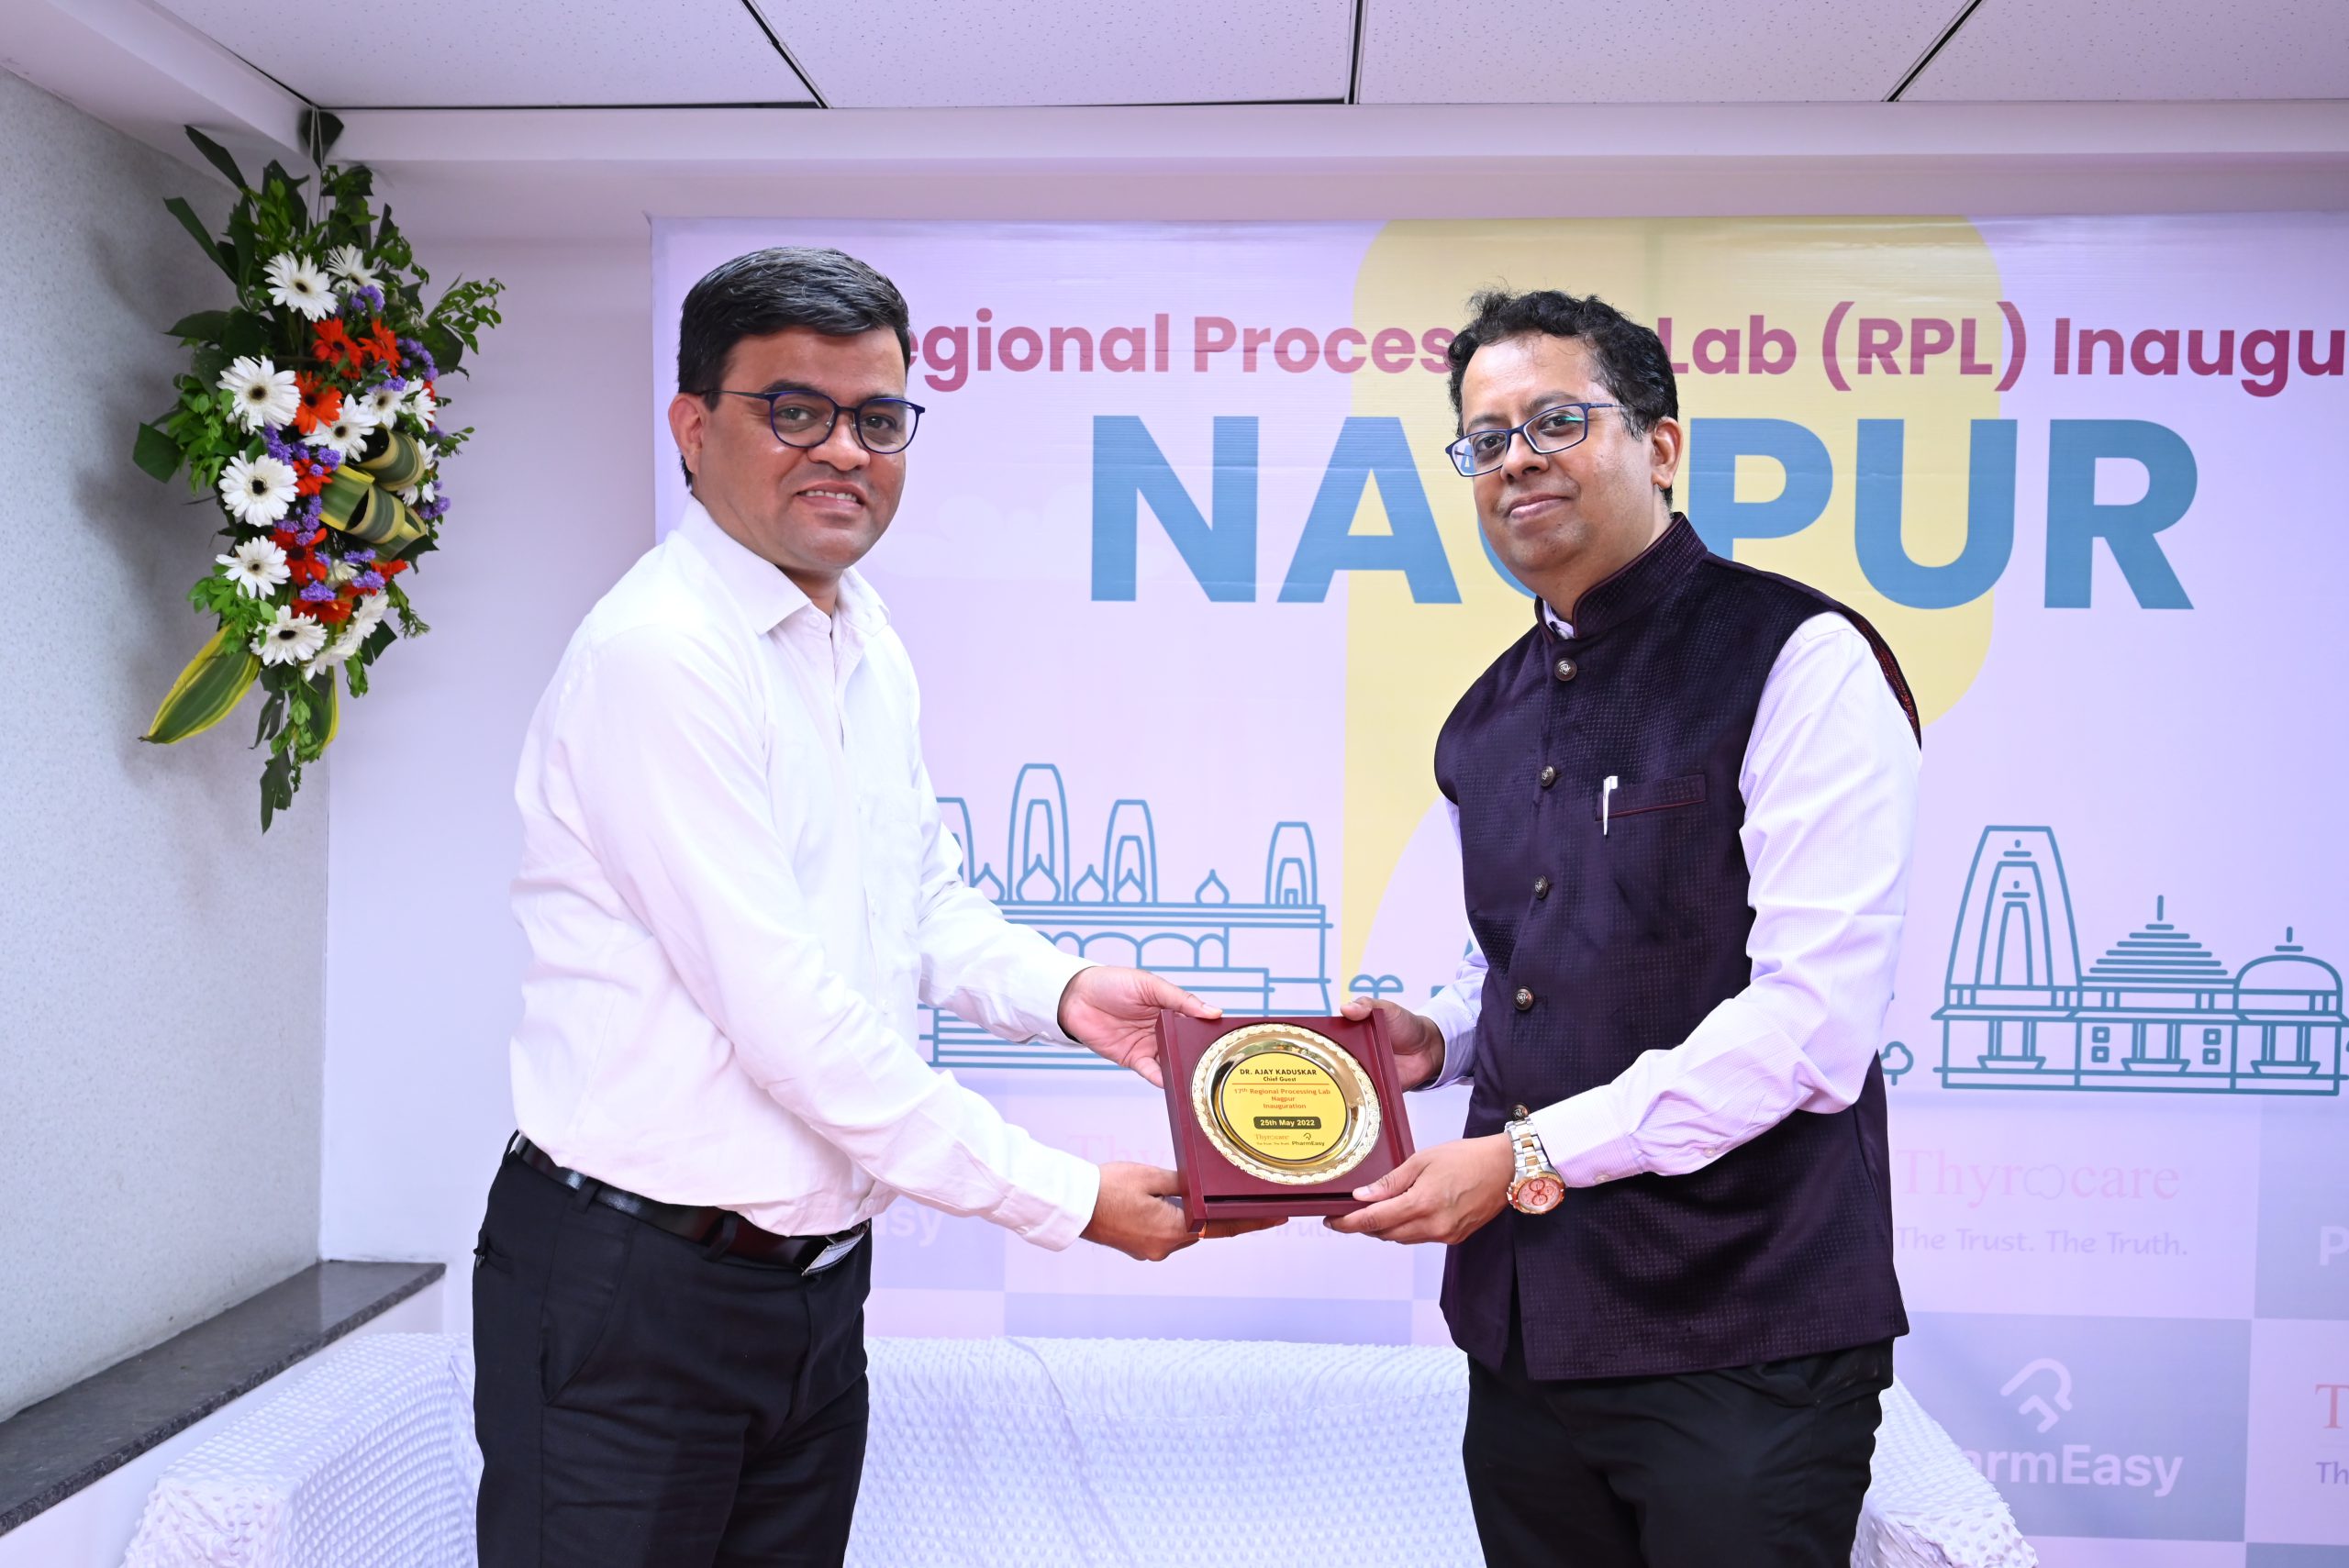 Nagpur RPL Launch